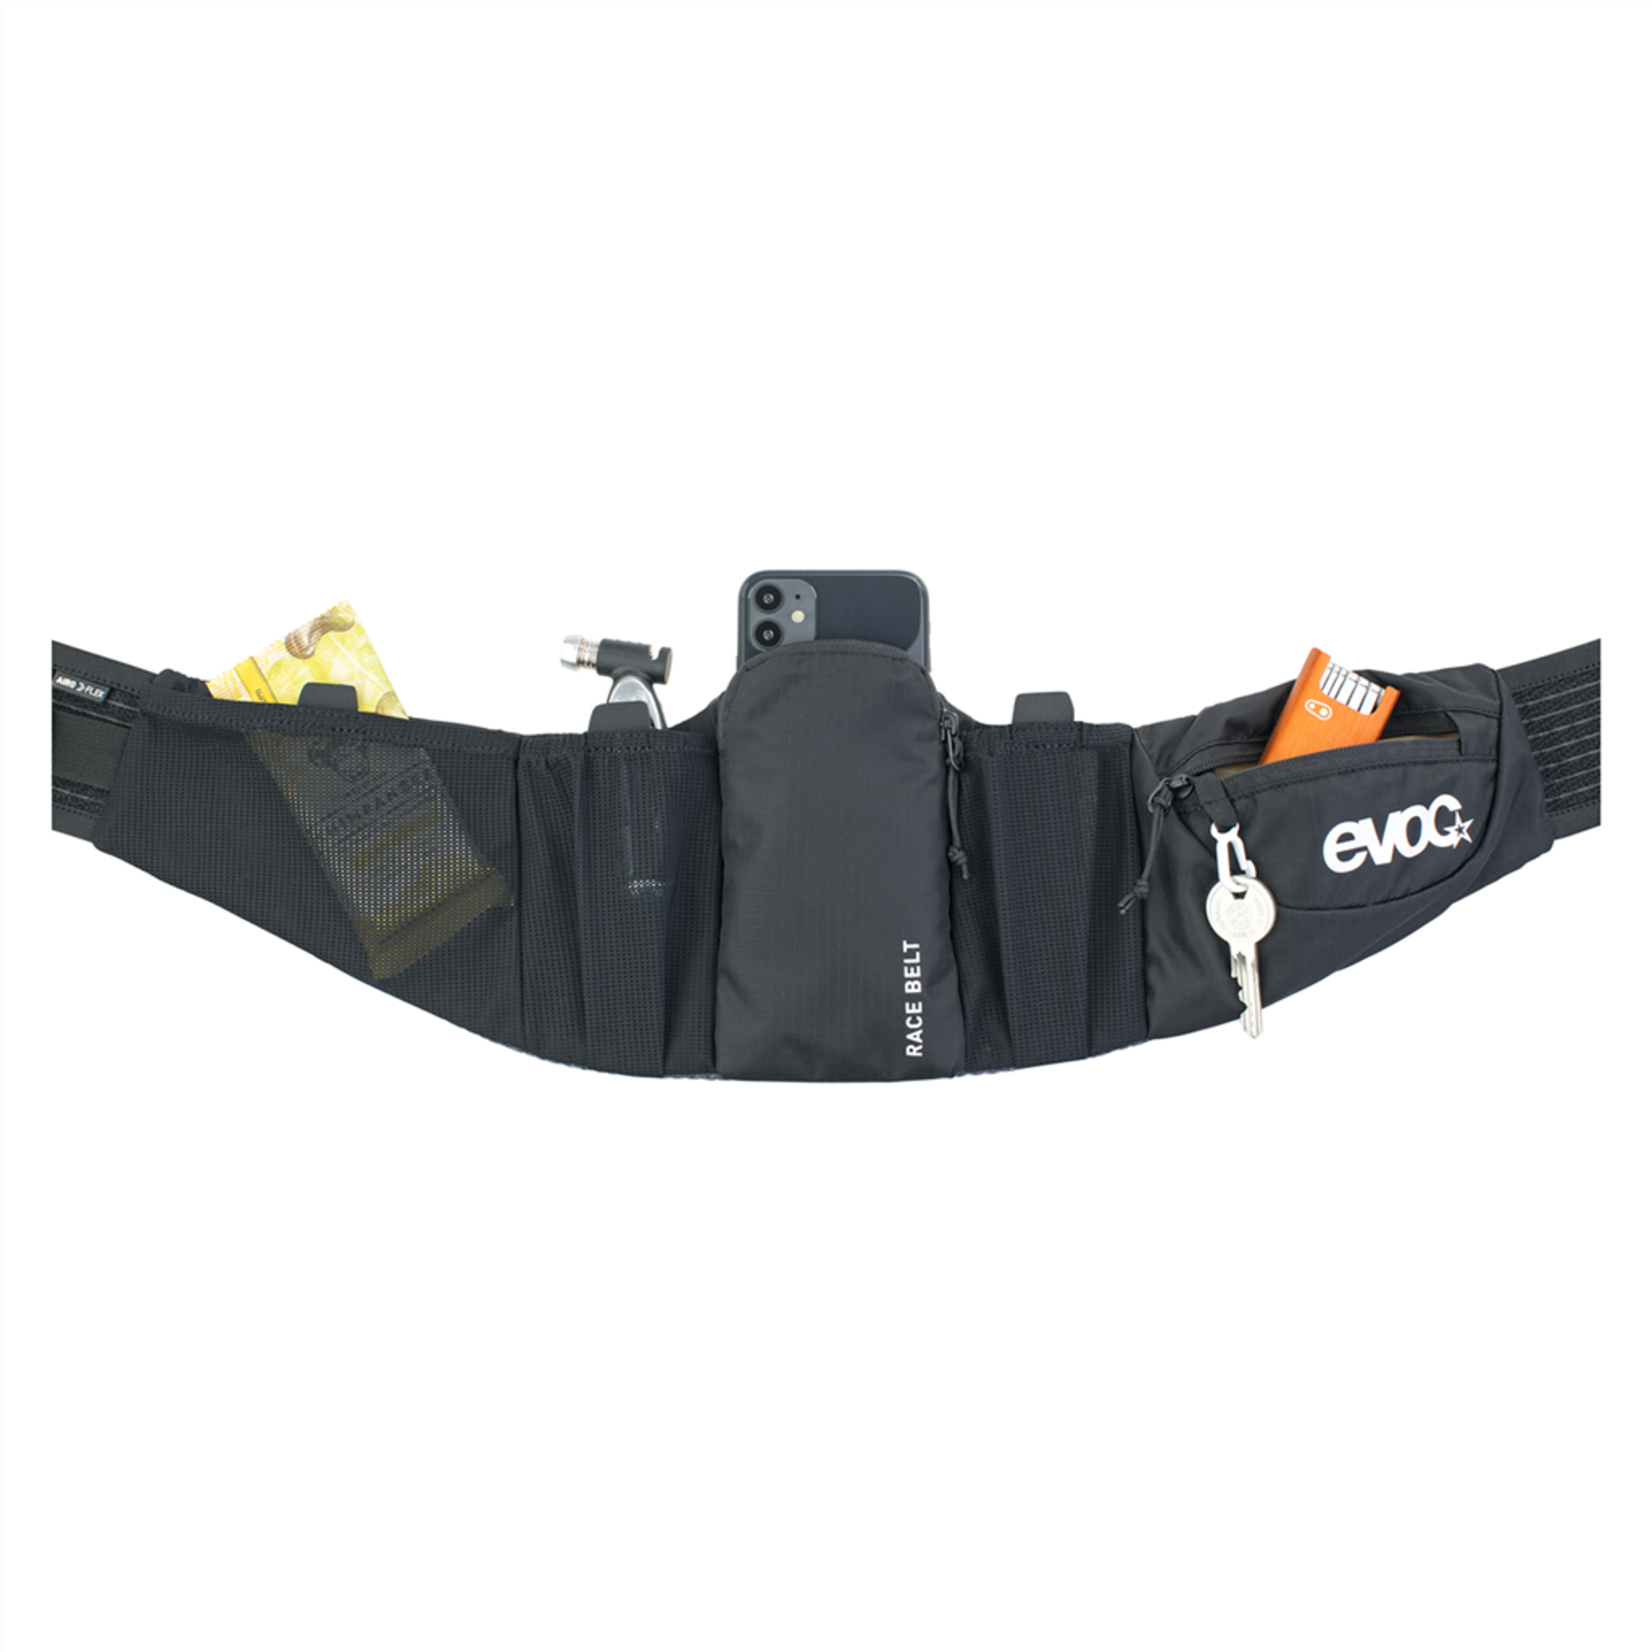 EVOC EVOC - Race Belt 0.8L - One size